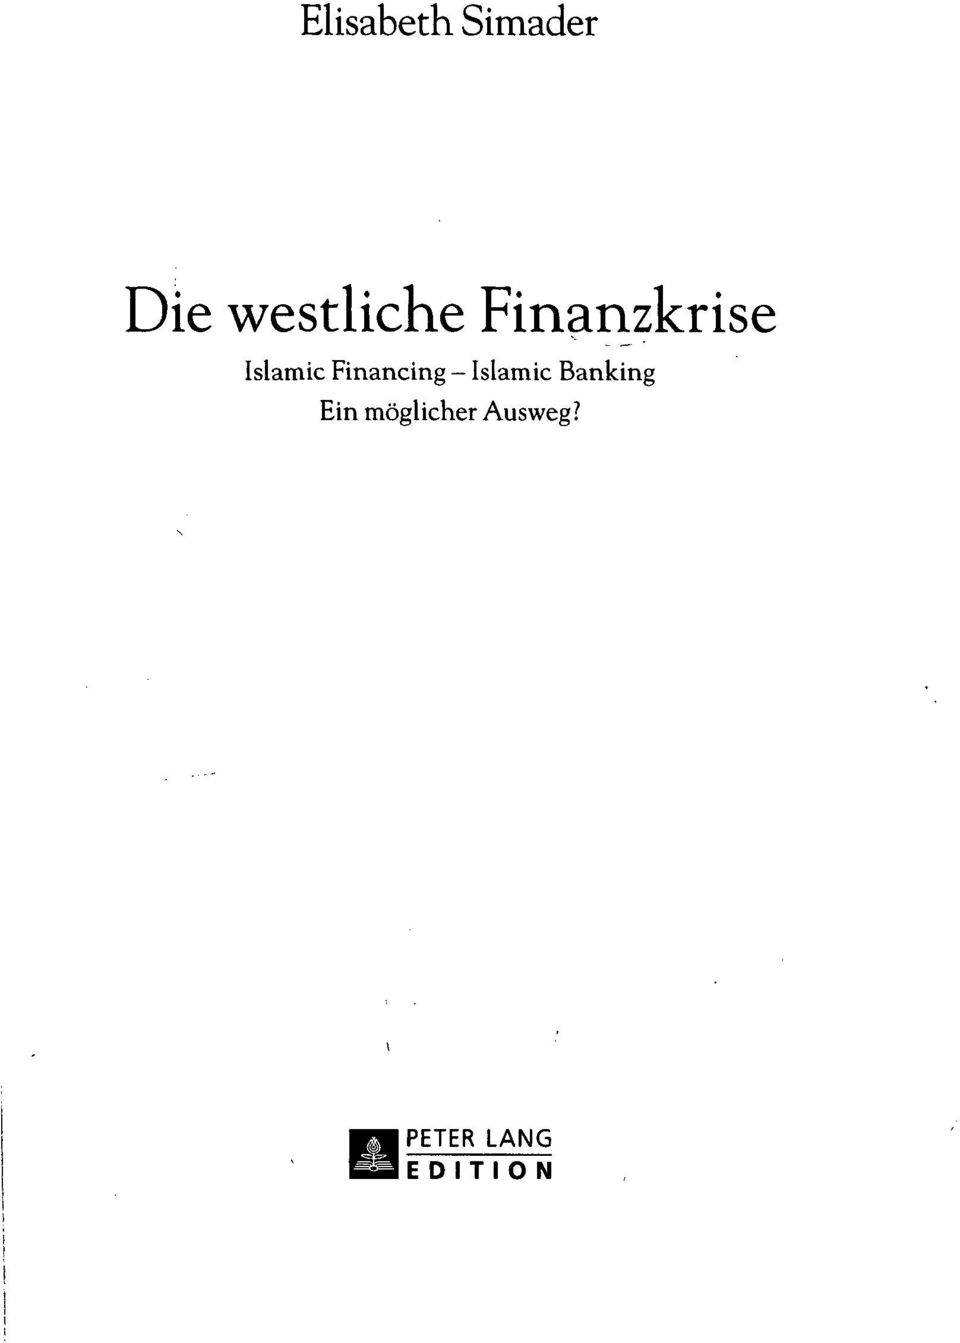 Financing - Islamic Banking